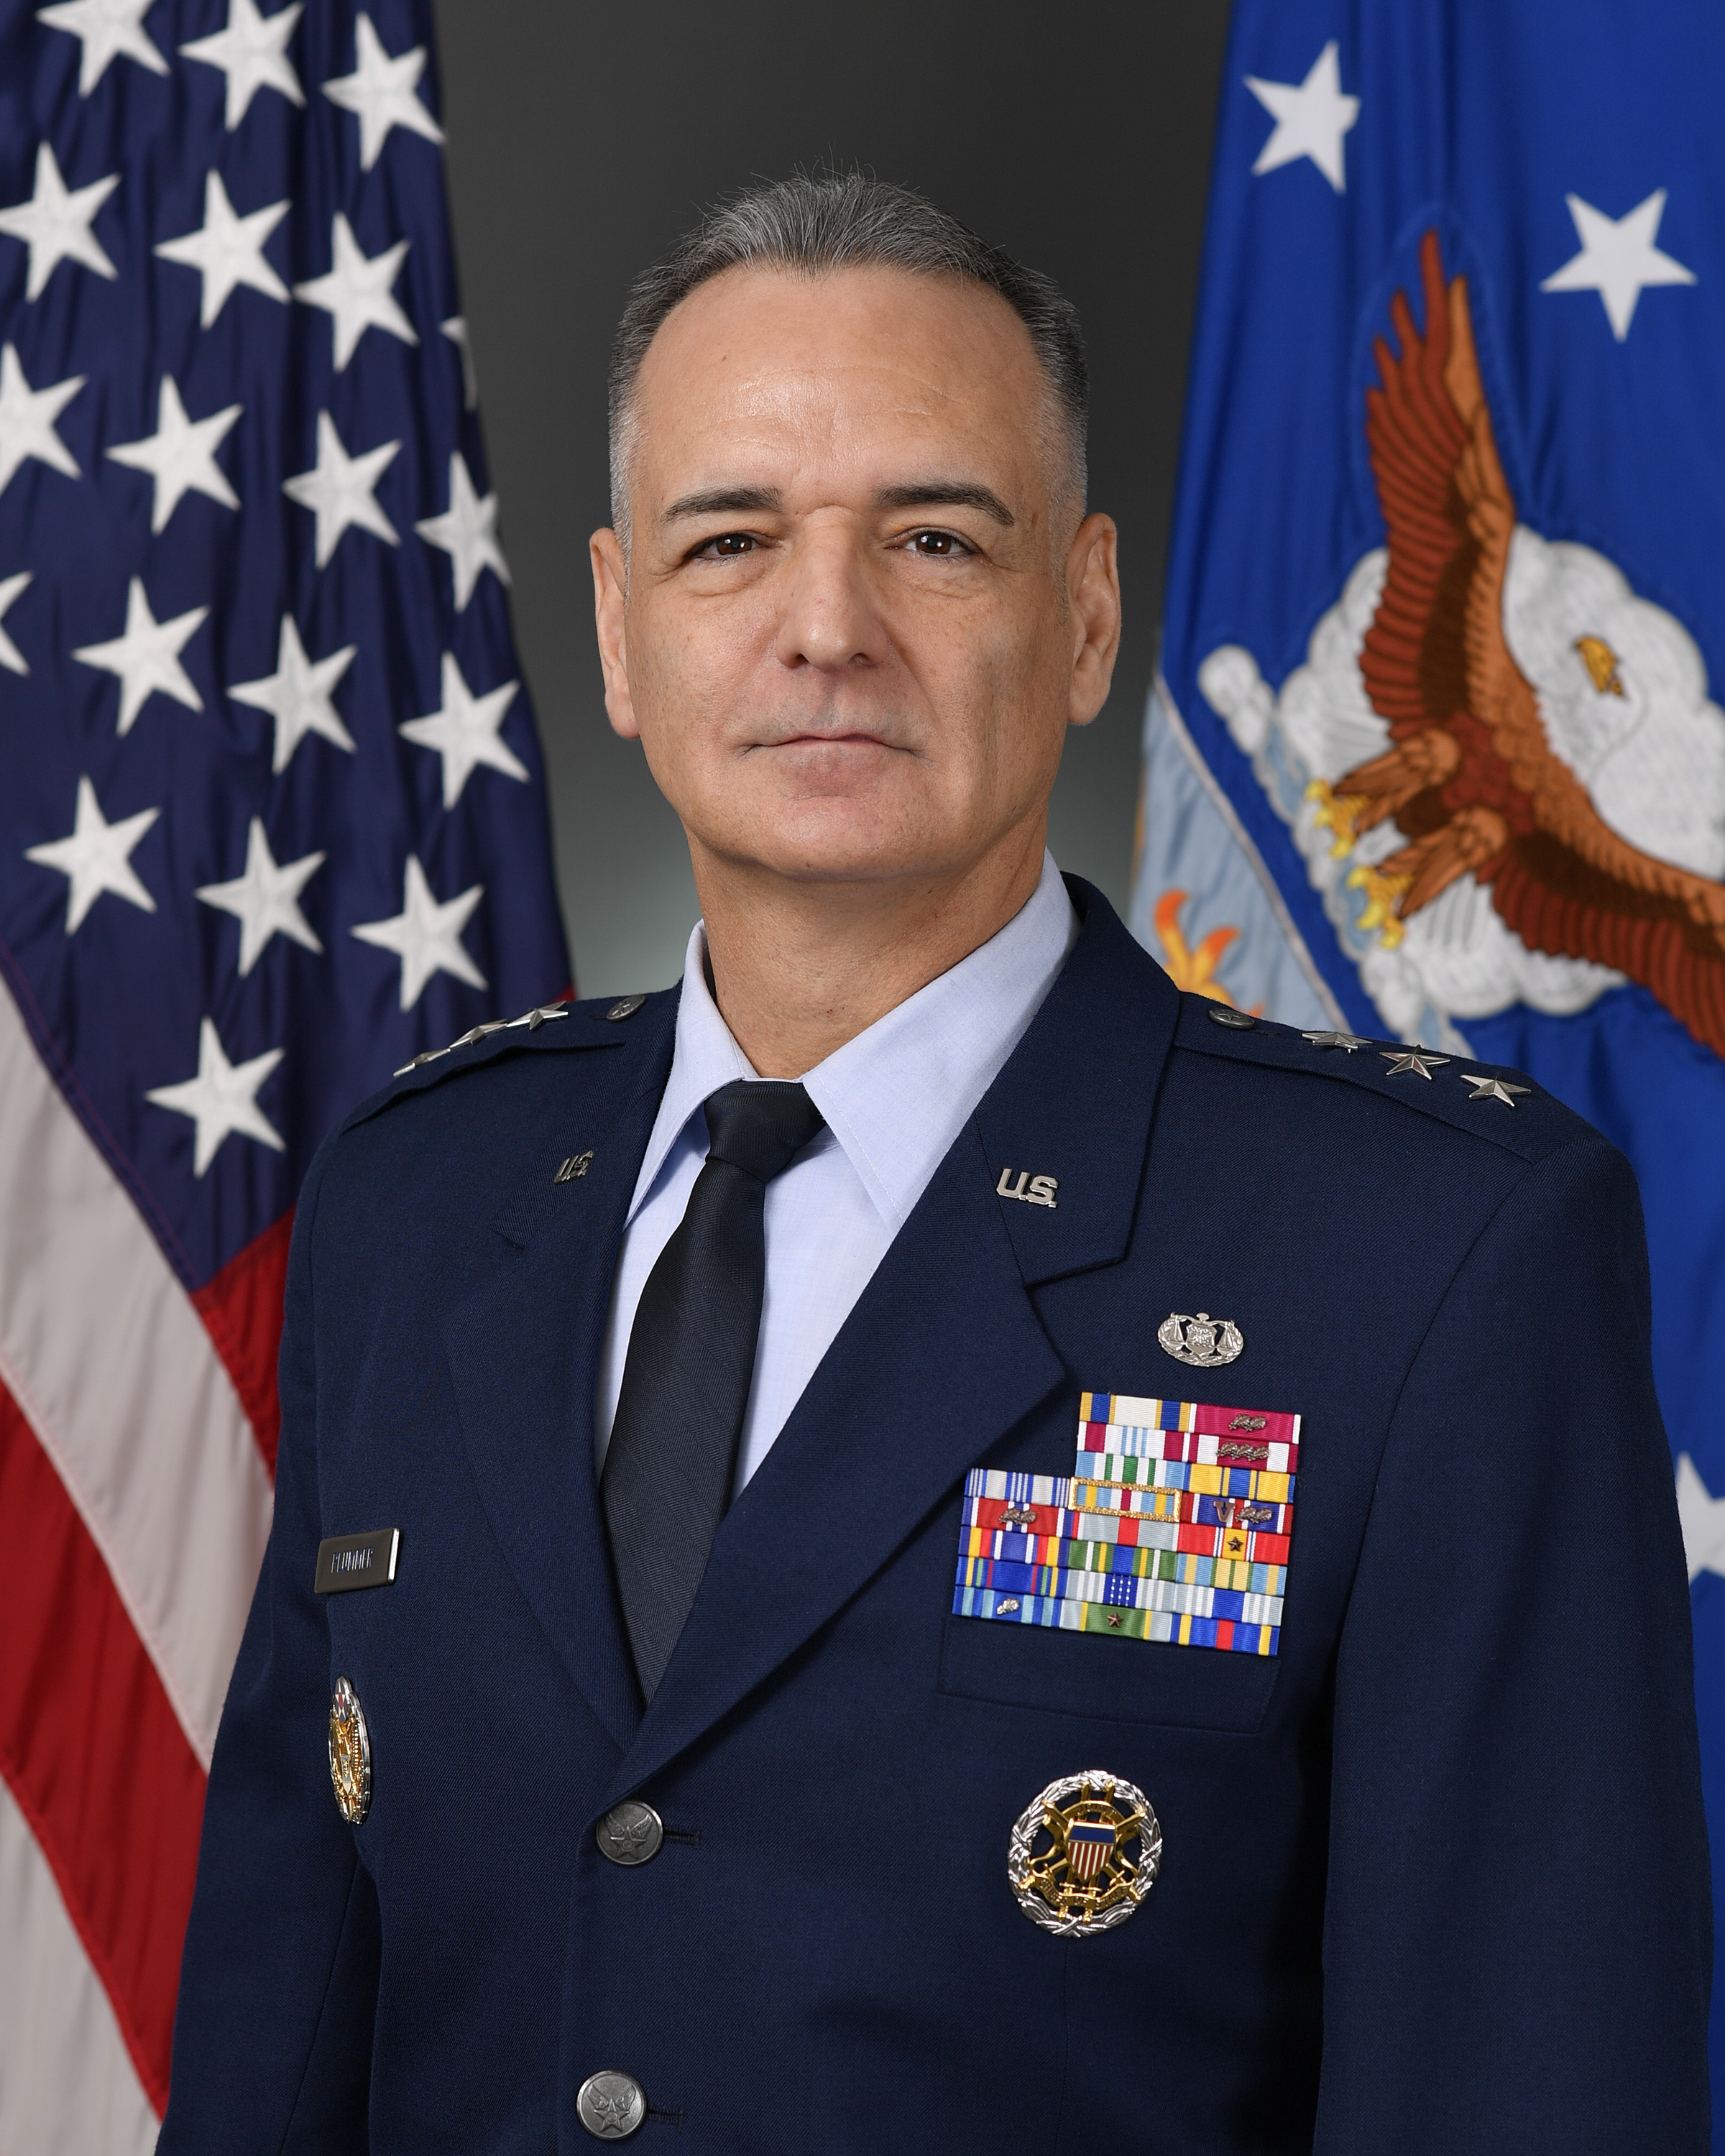 Lieutenant General Charles L. Plummer